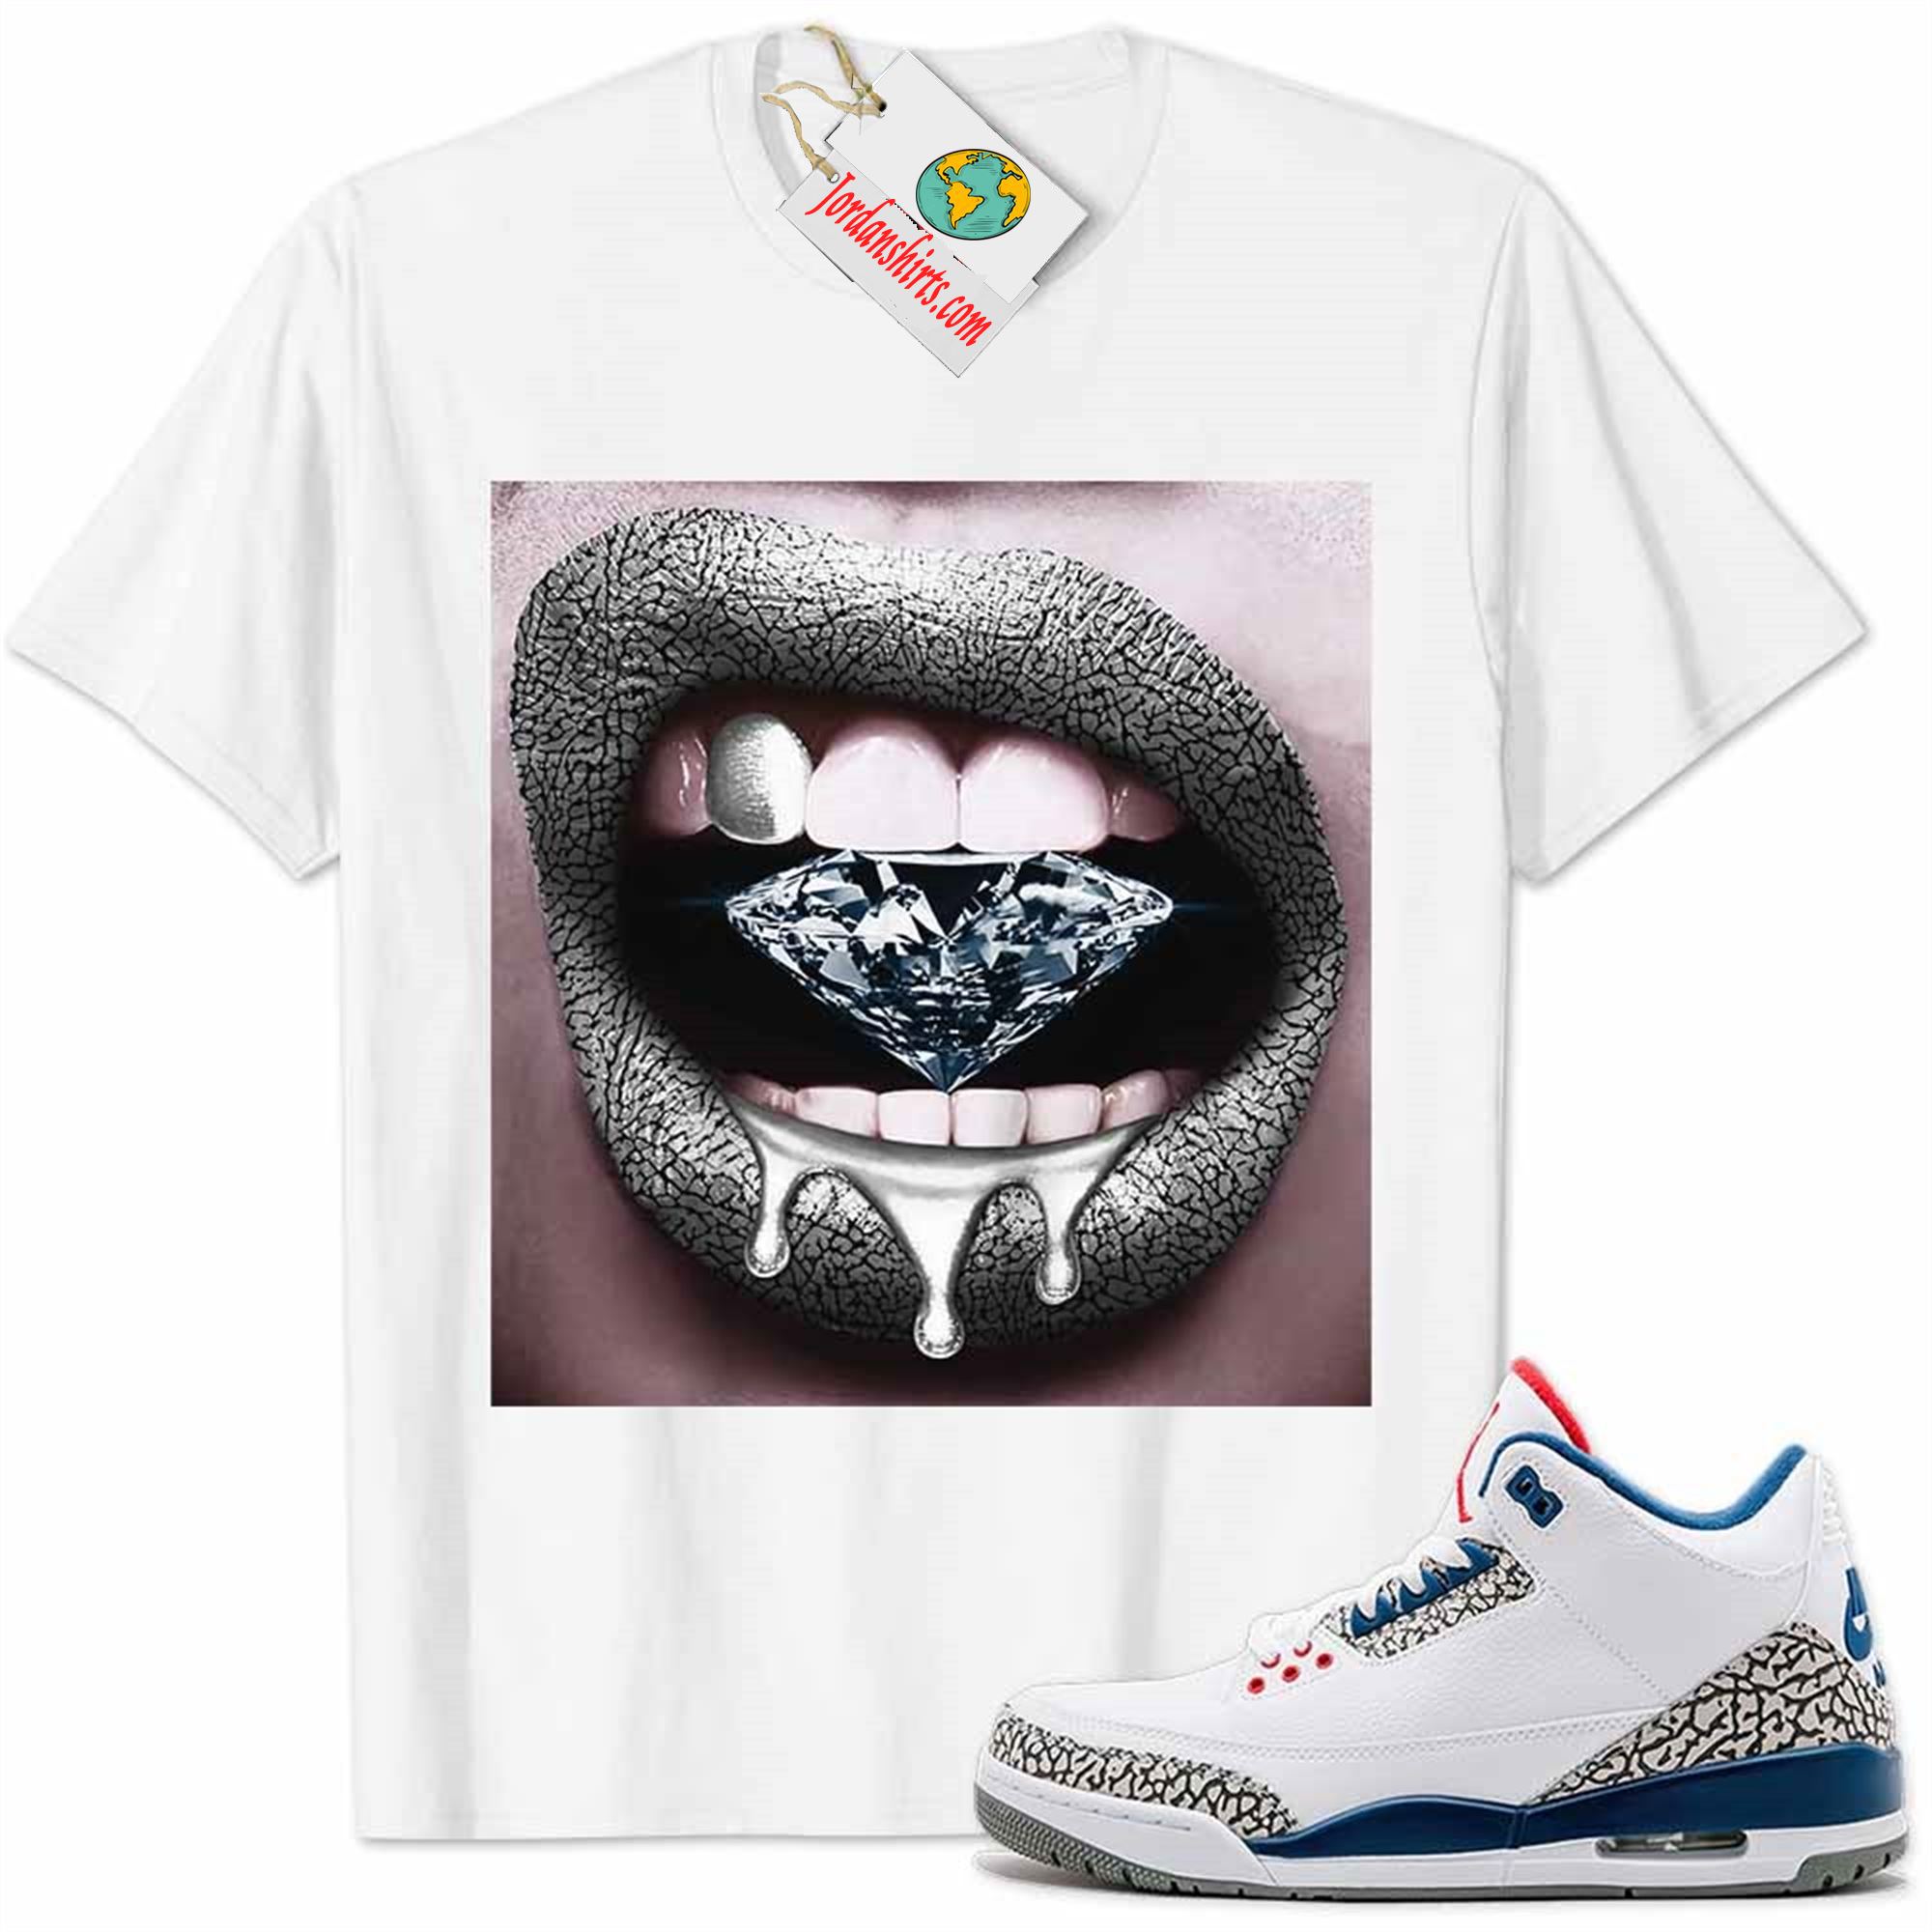 Jordan 3 Shirt, Jordan 3 True Blue Shirt Sexy Lip Bite Diamond Dripping White Size Up To 5xl